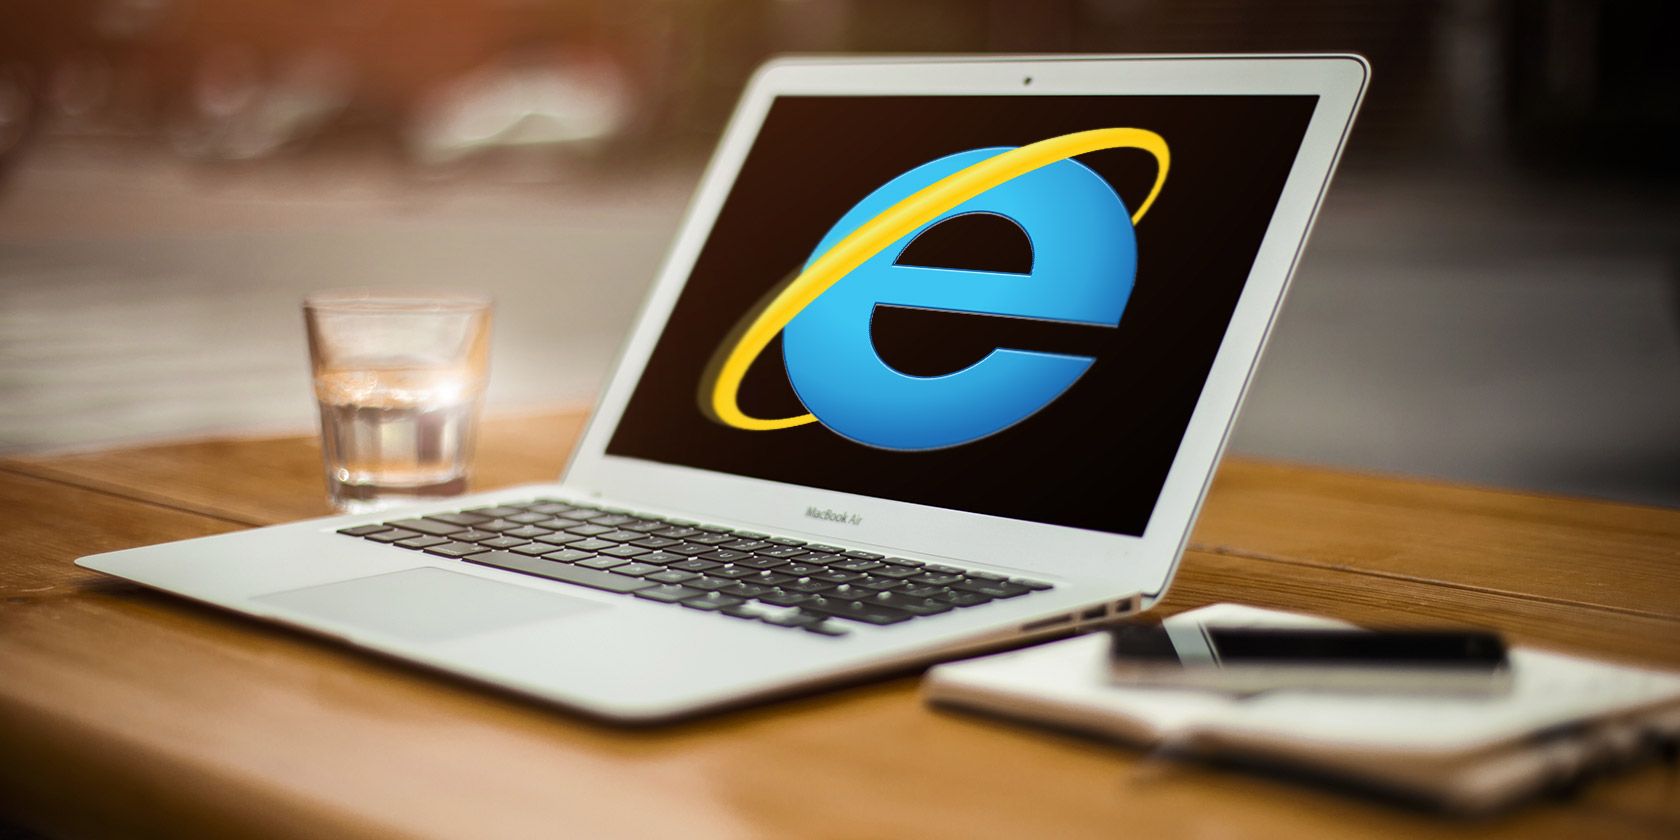 Internet Explorer logo on a MacBook screen